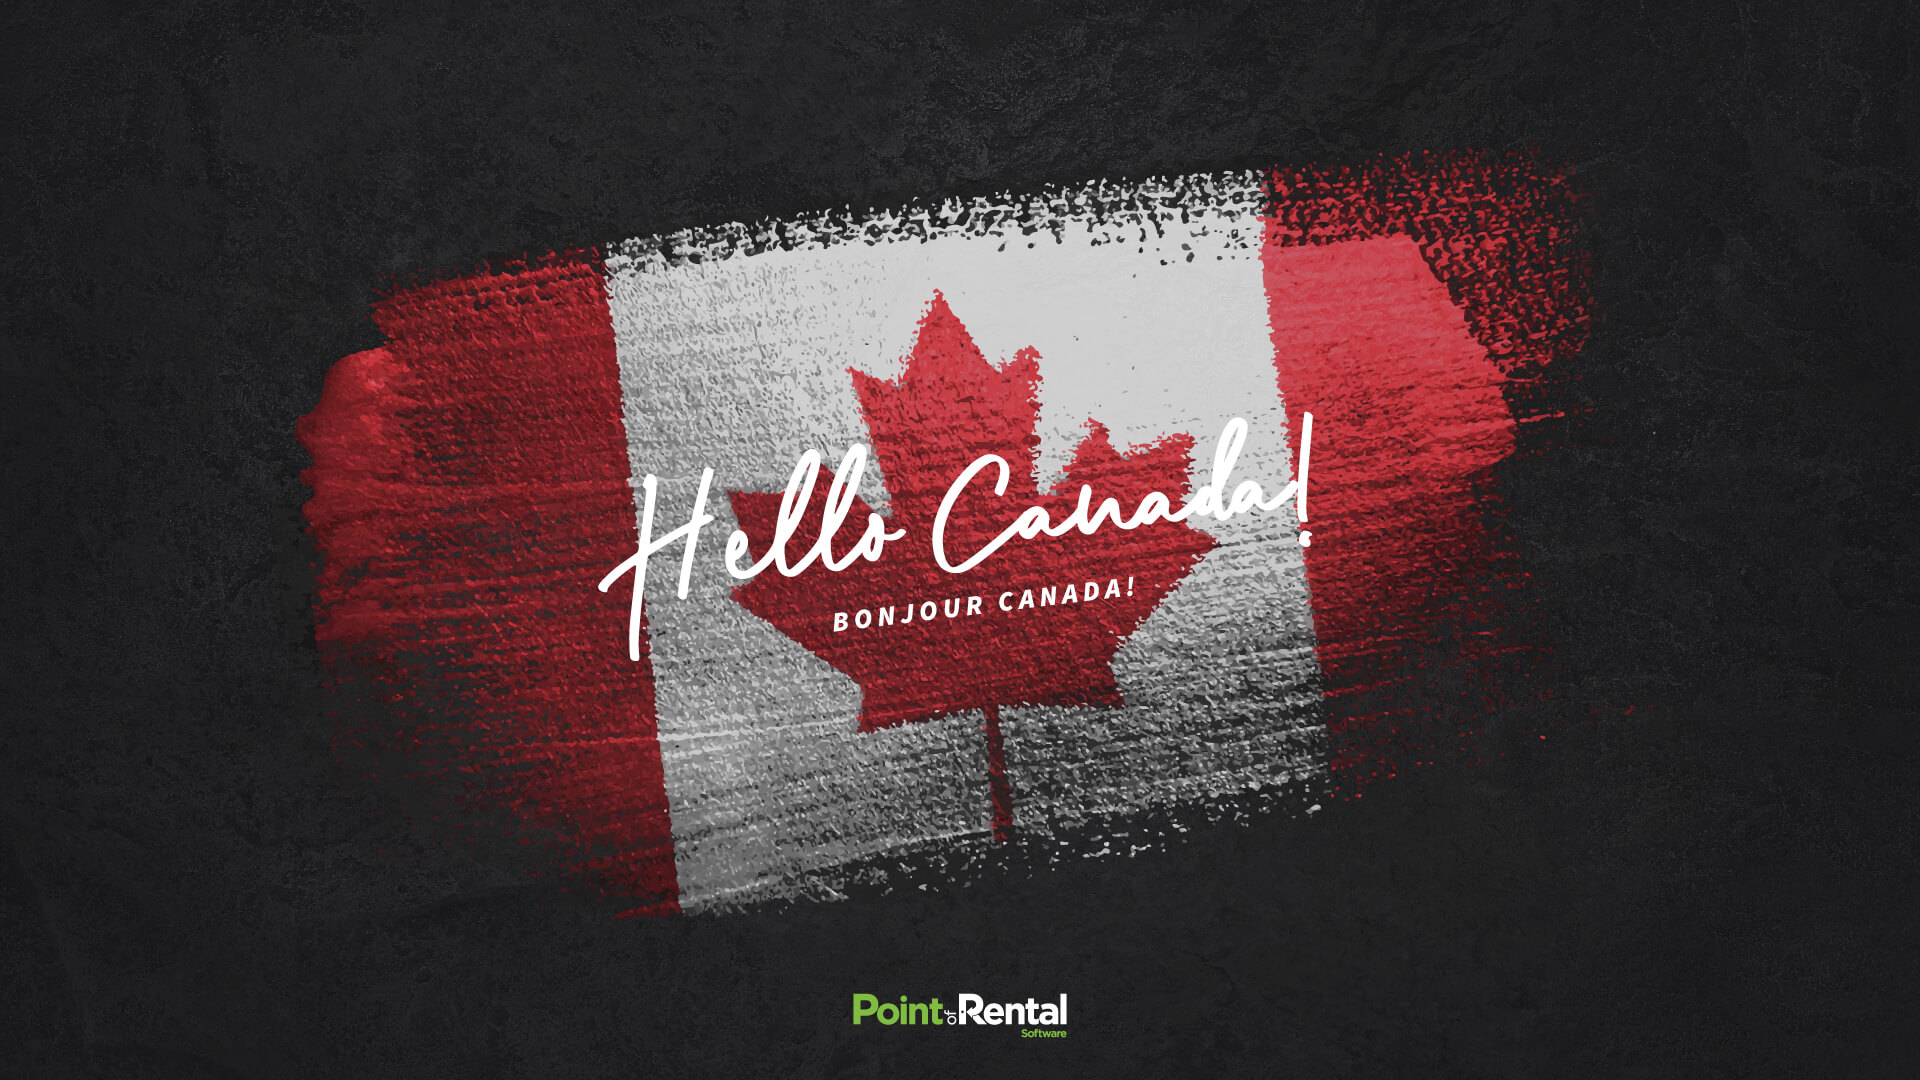 Hello Canada written over a Canadian flag